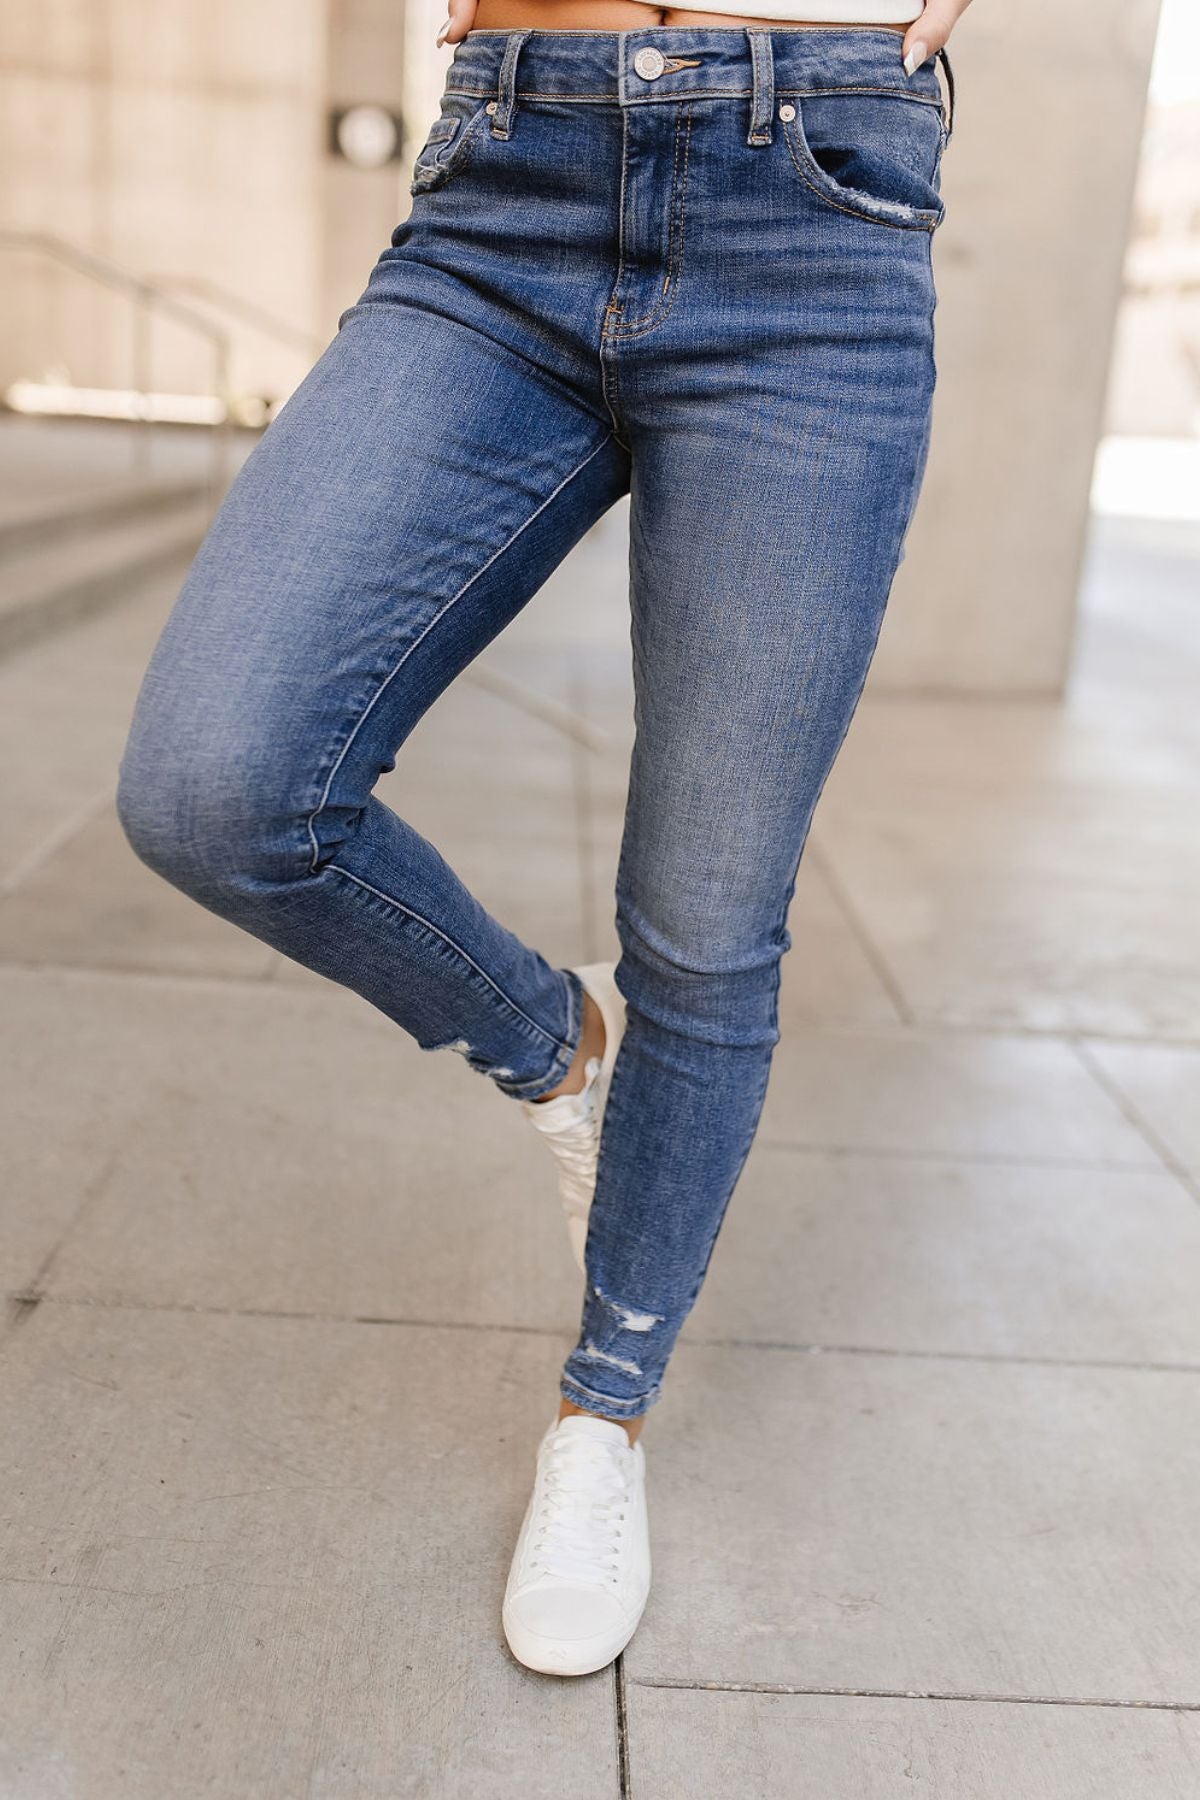 Ampersand Avenue 622 Denim - Distressed Ankle Skinny Jeans